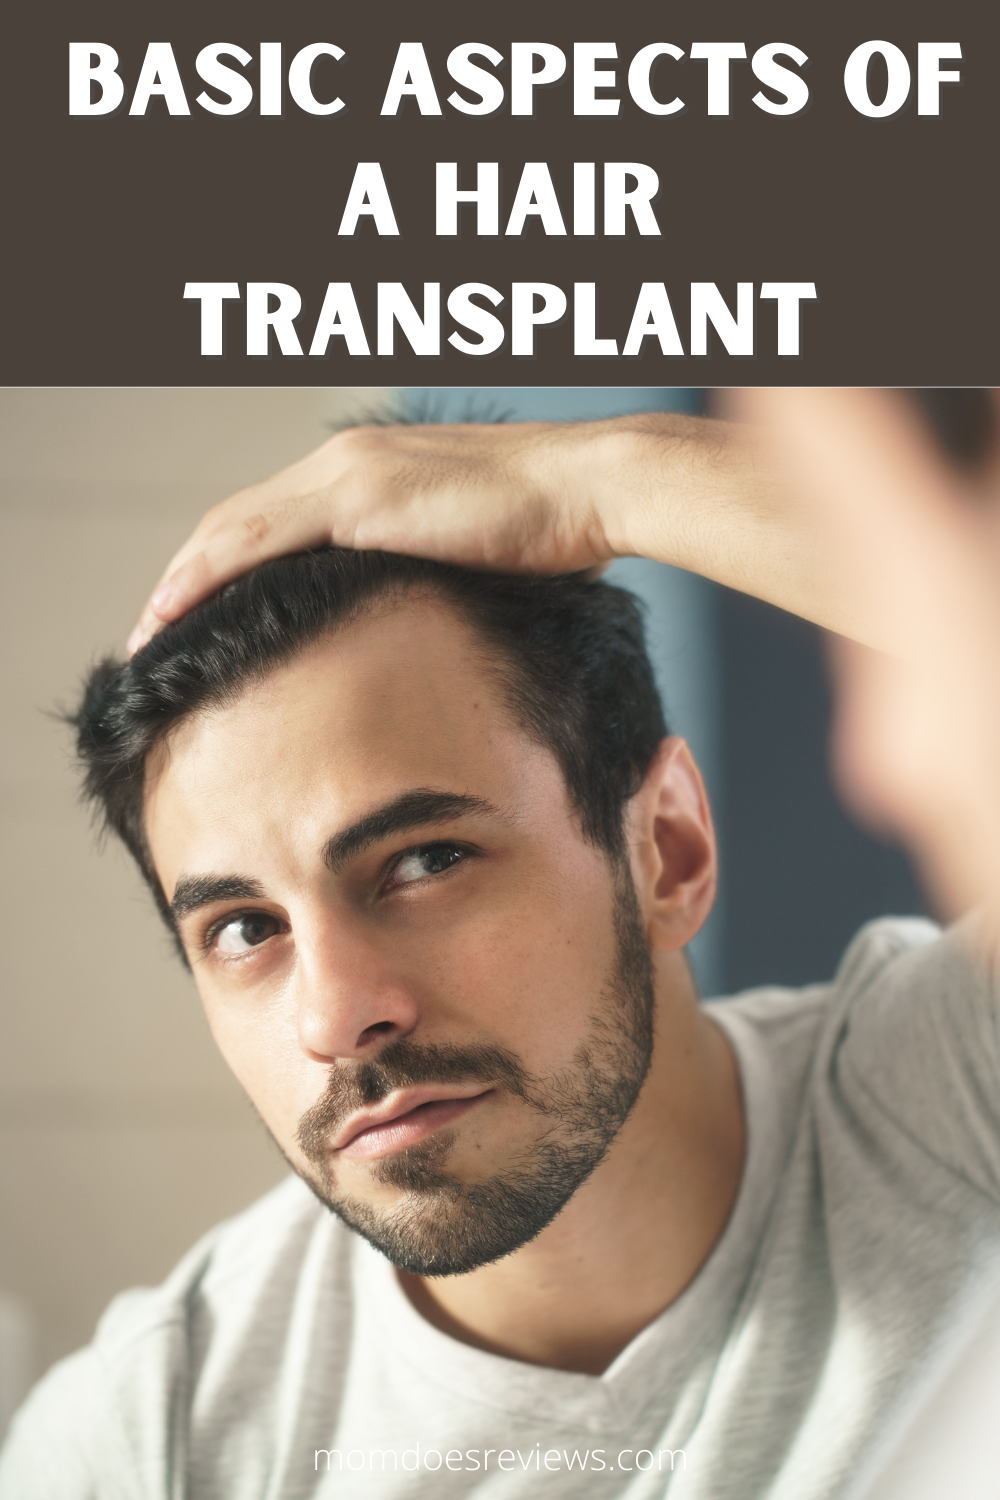  Basic Aspects of a Hair Transplant